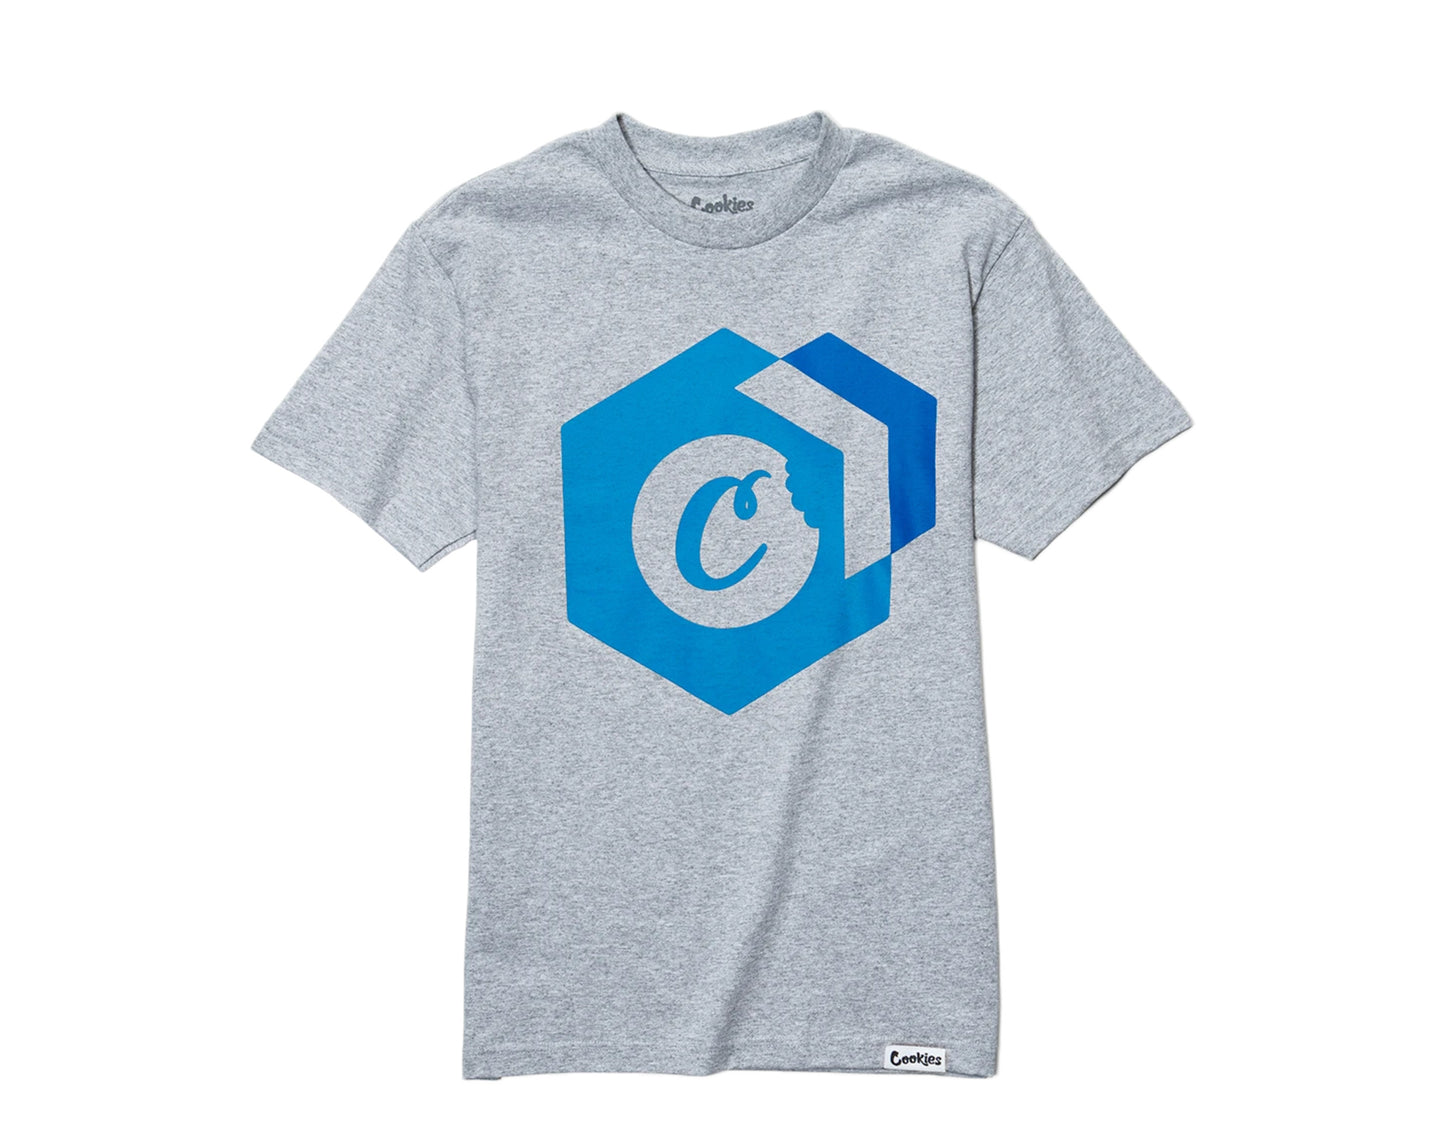 Cookies Bright Future Hexagon Logo Grey/Blue Men's Tee Shirt 1545T4135-HGB